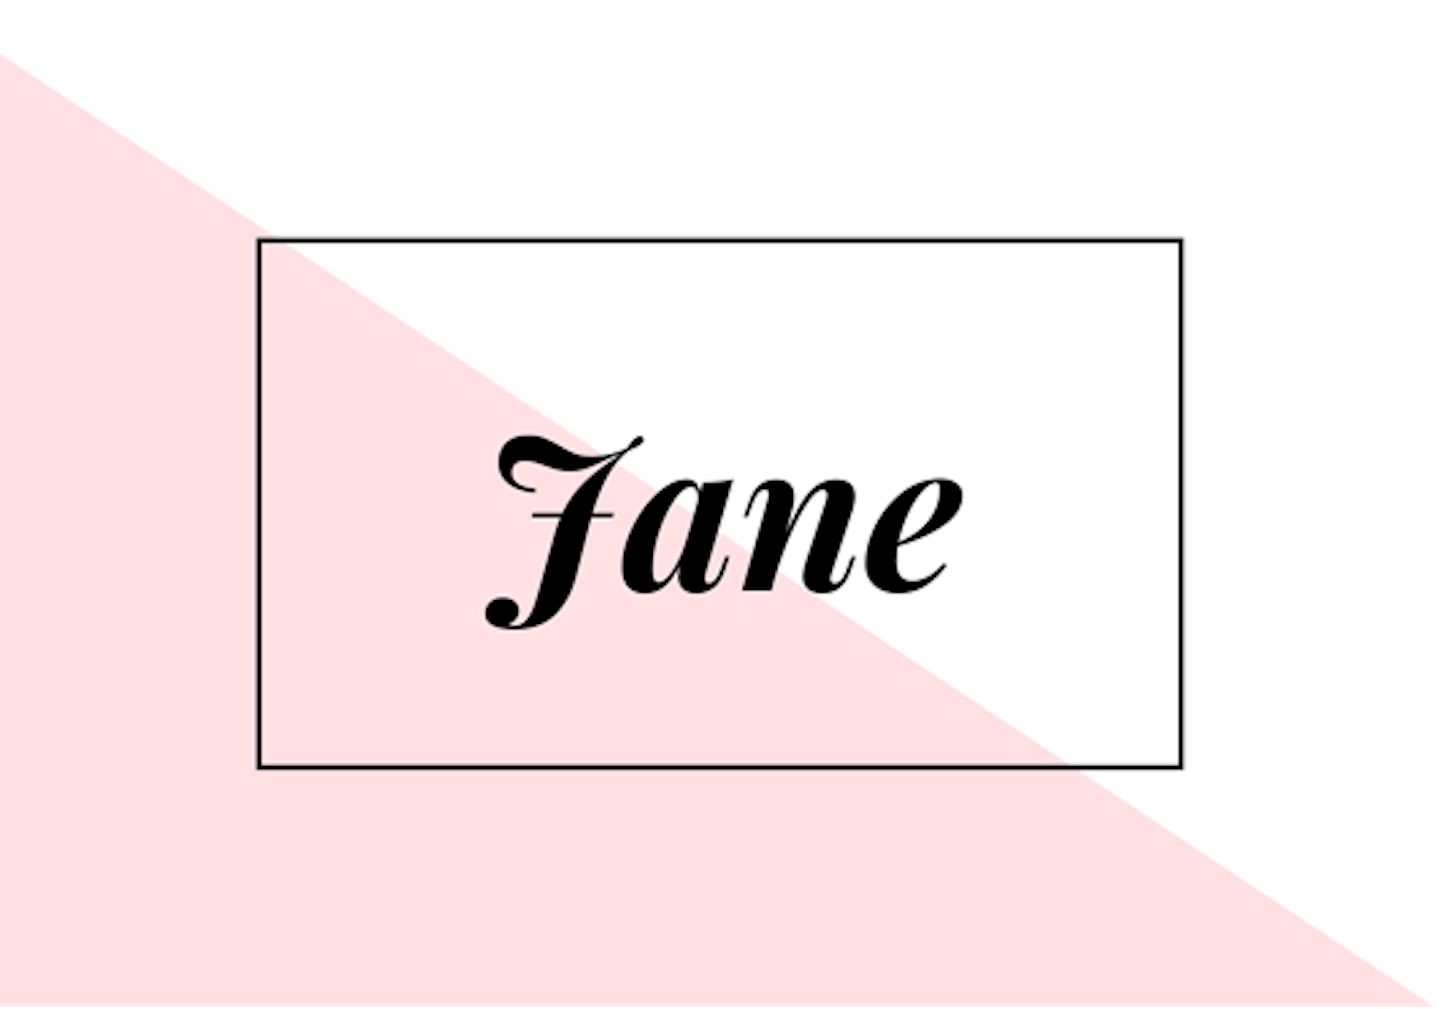 17) Jane